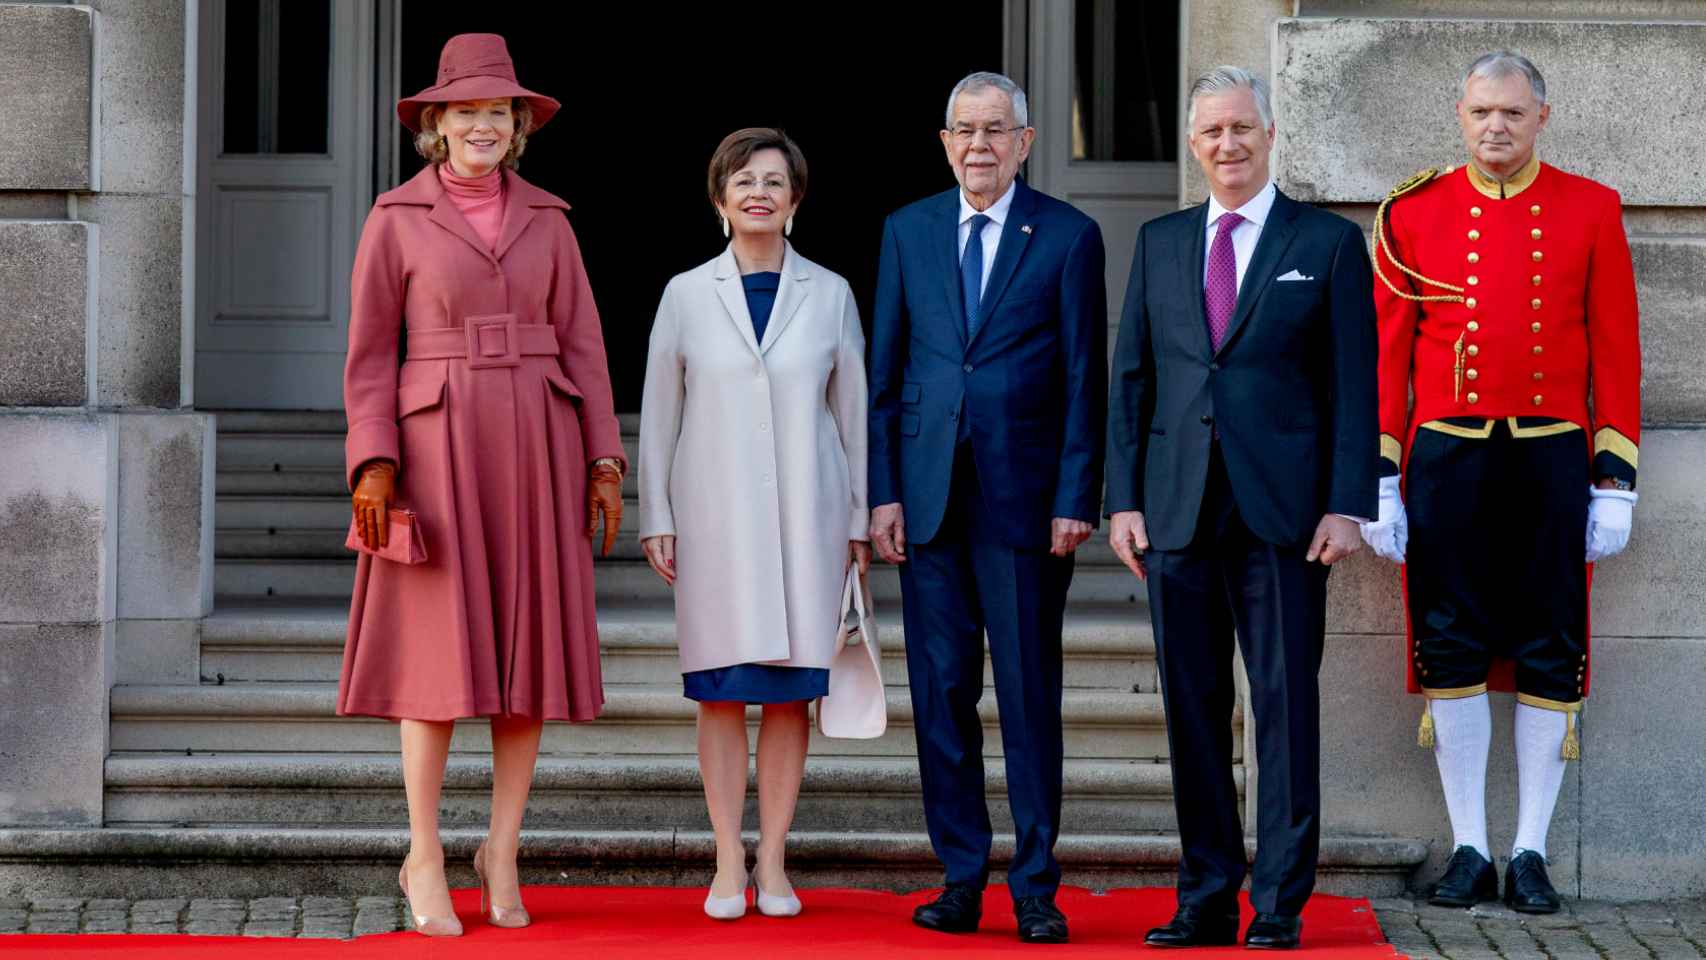 Matilde de Bélgica, Doris Schmidauer, el presidente de Austria Alexander Van der Bellen y el rey Felipe de Bélgica.